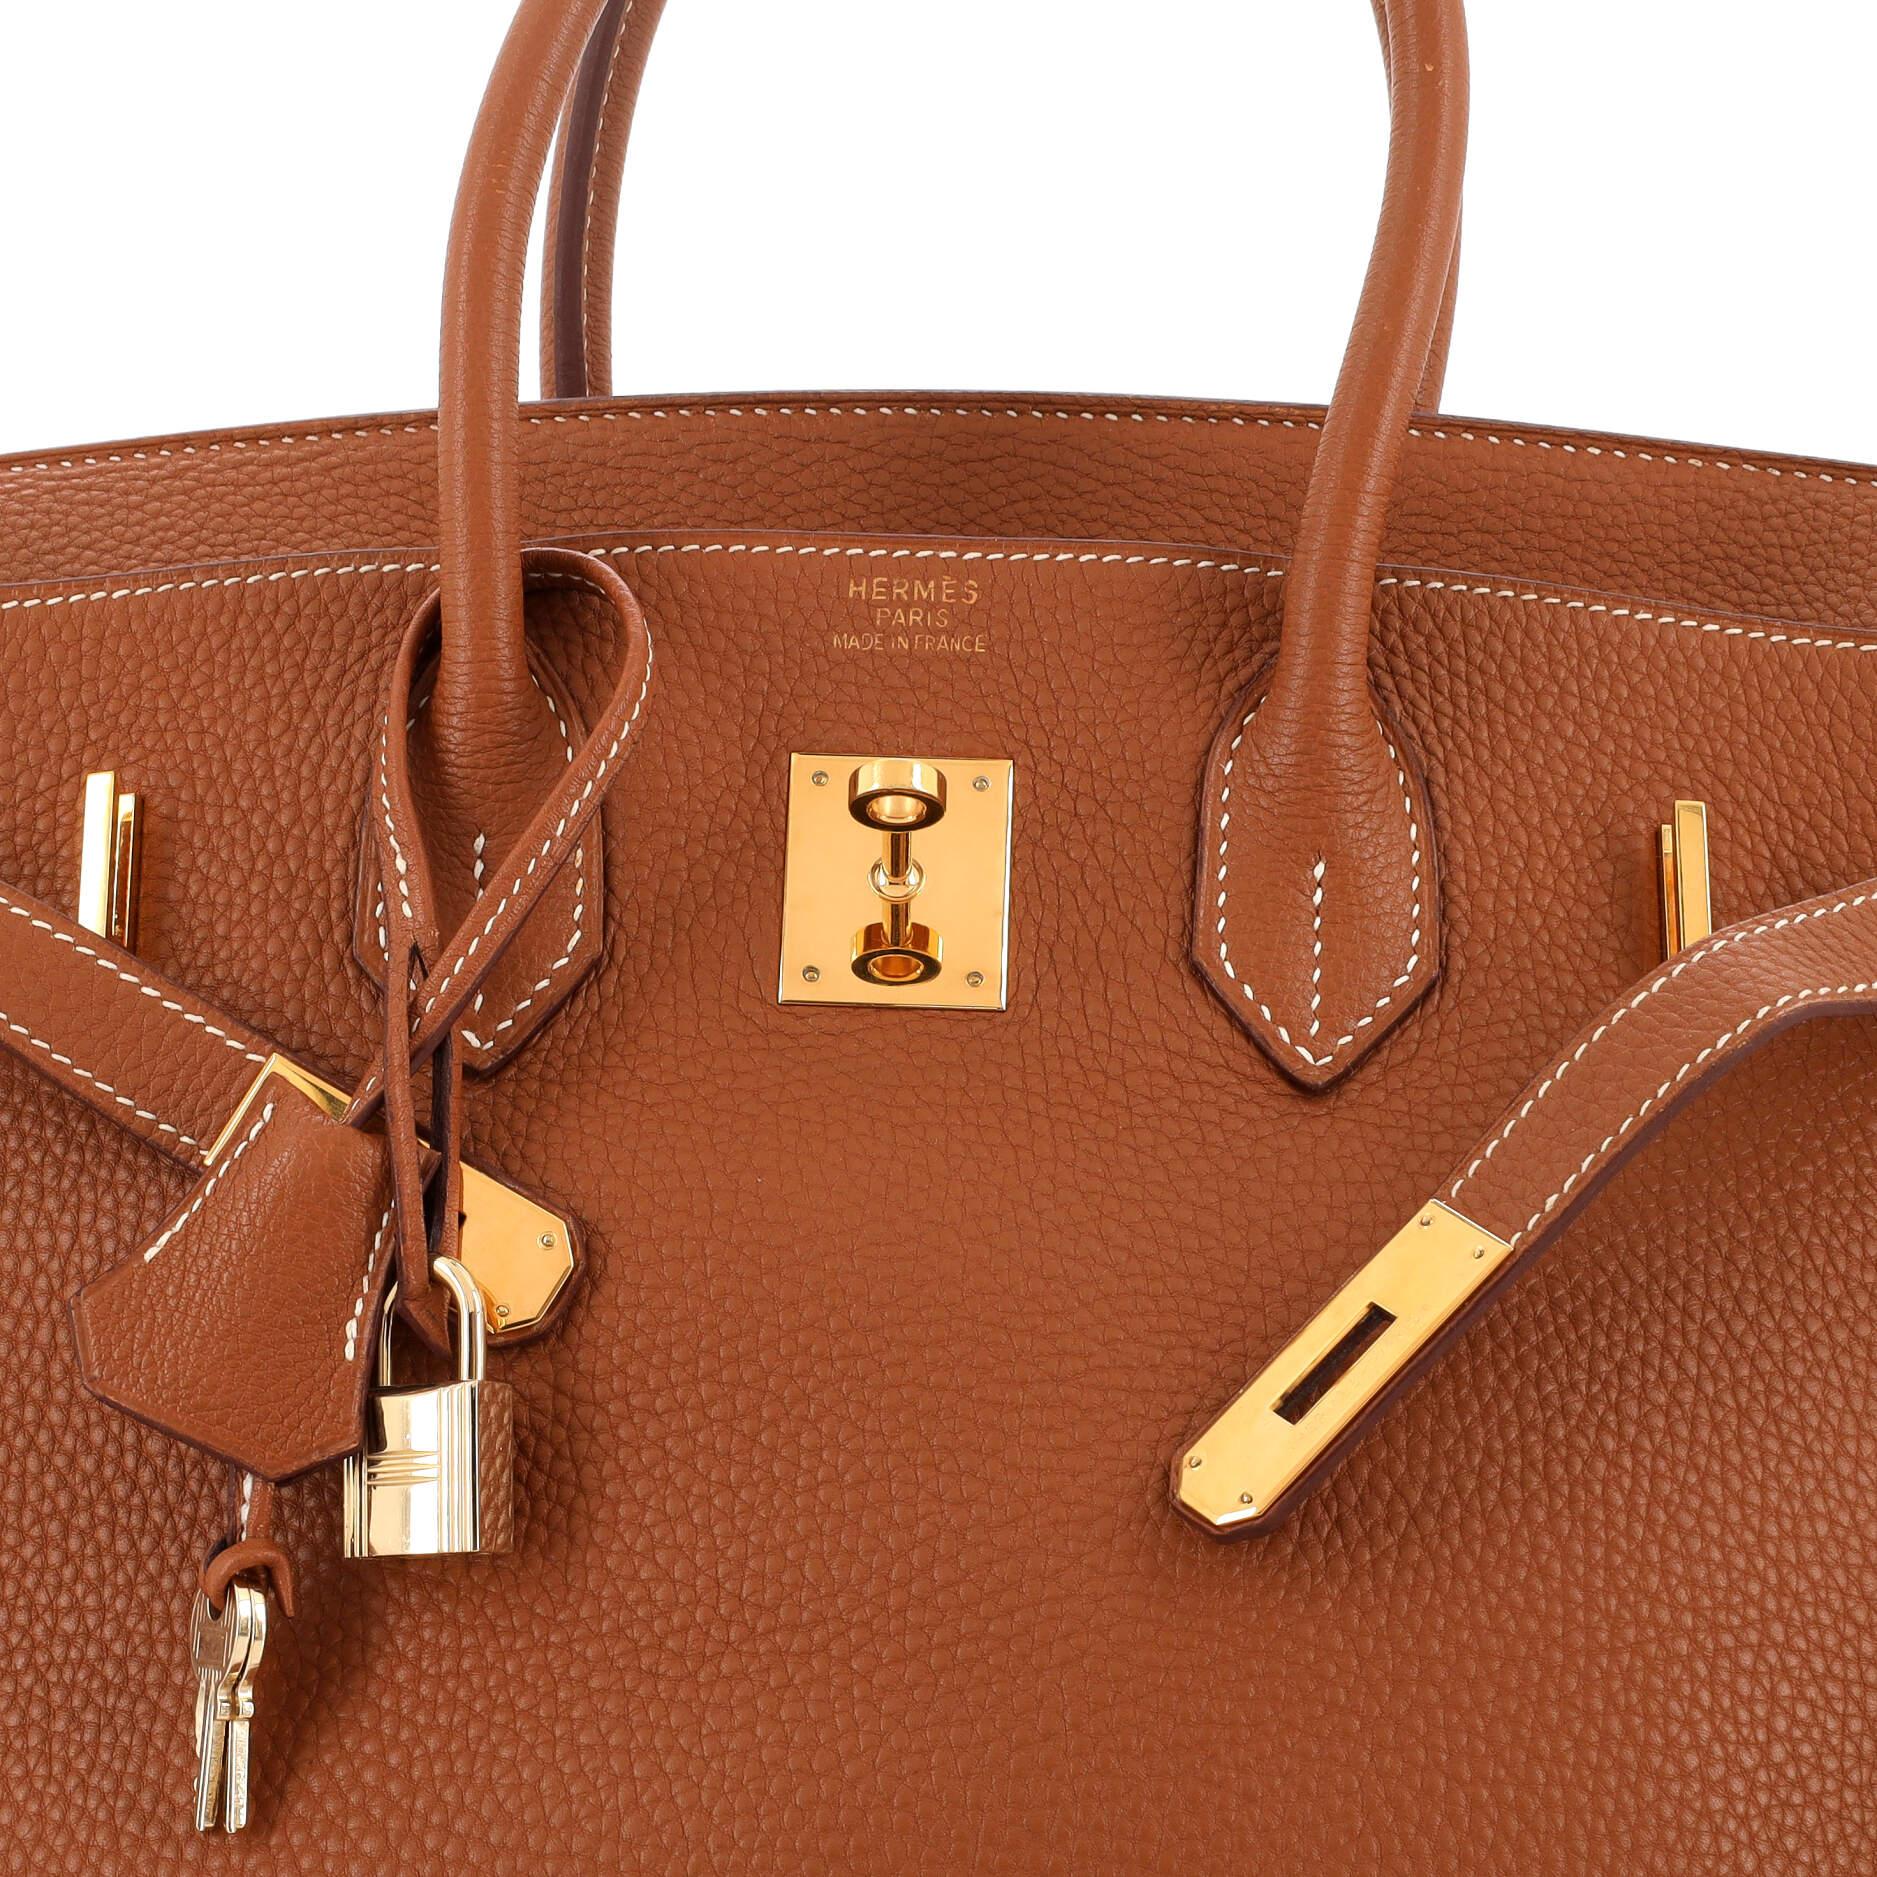 Hermes Birkin Handbag Gold Togo with Gold Hardware 35 1